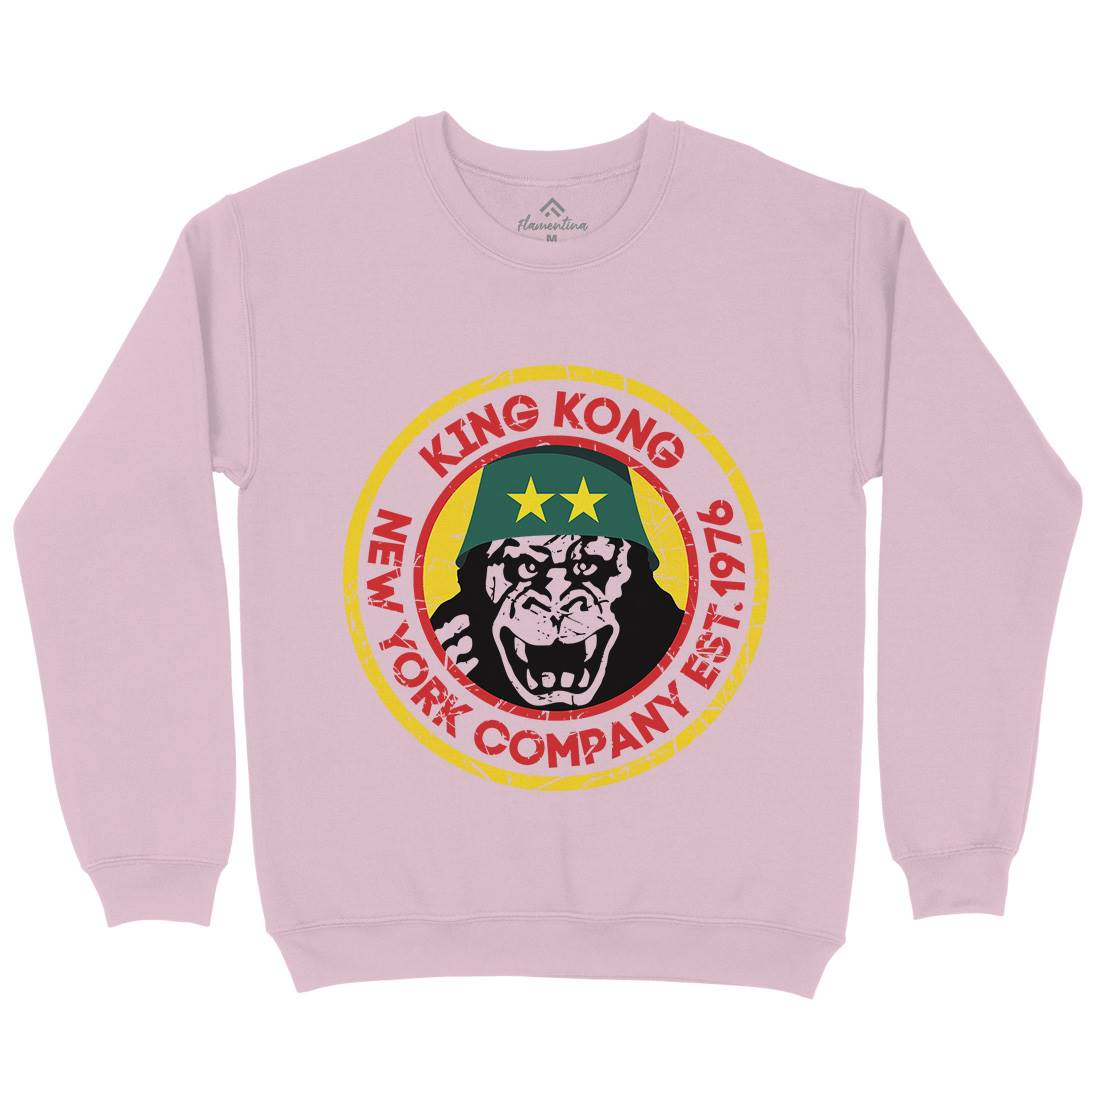 King Kong Company Kids Crew Neck Sweatshirt Retro D362